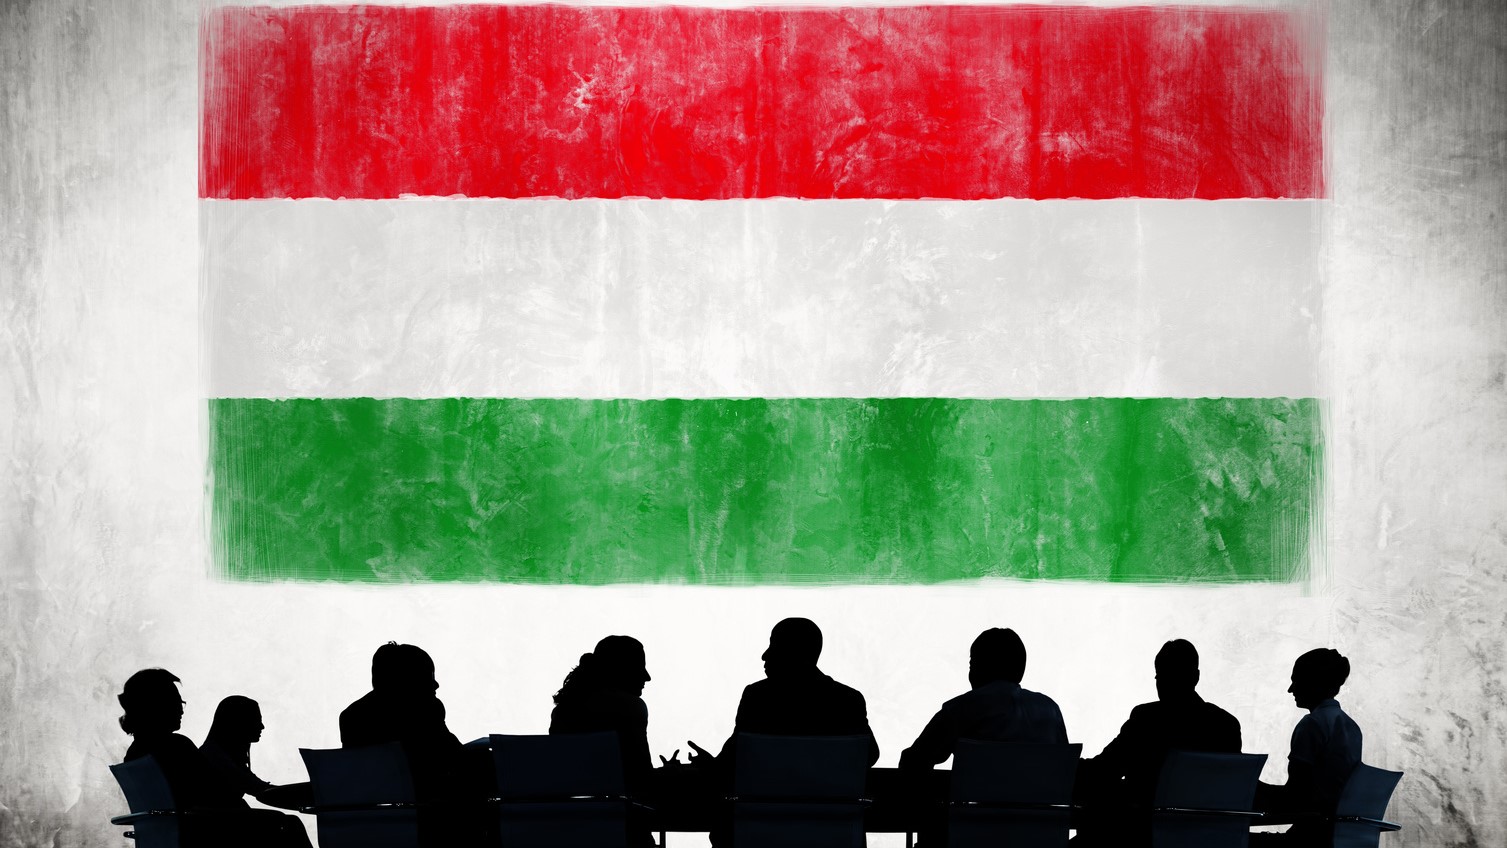 Bezpłatna konferencja Doing Business in Hungary - 9 lutego